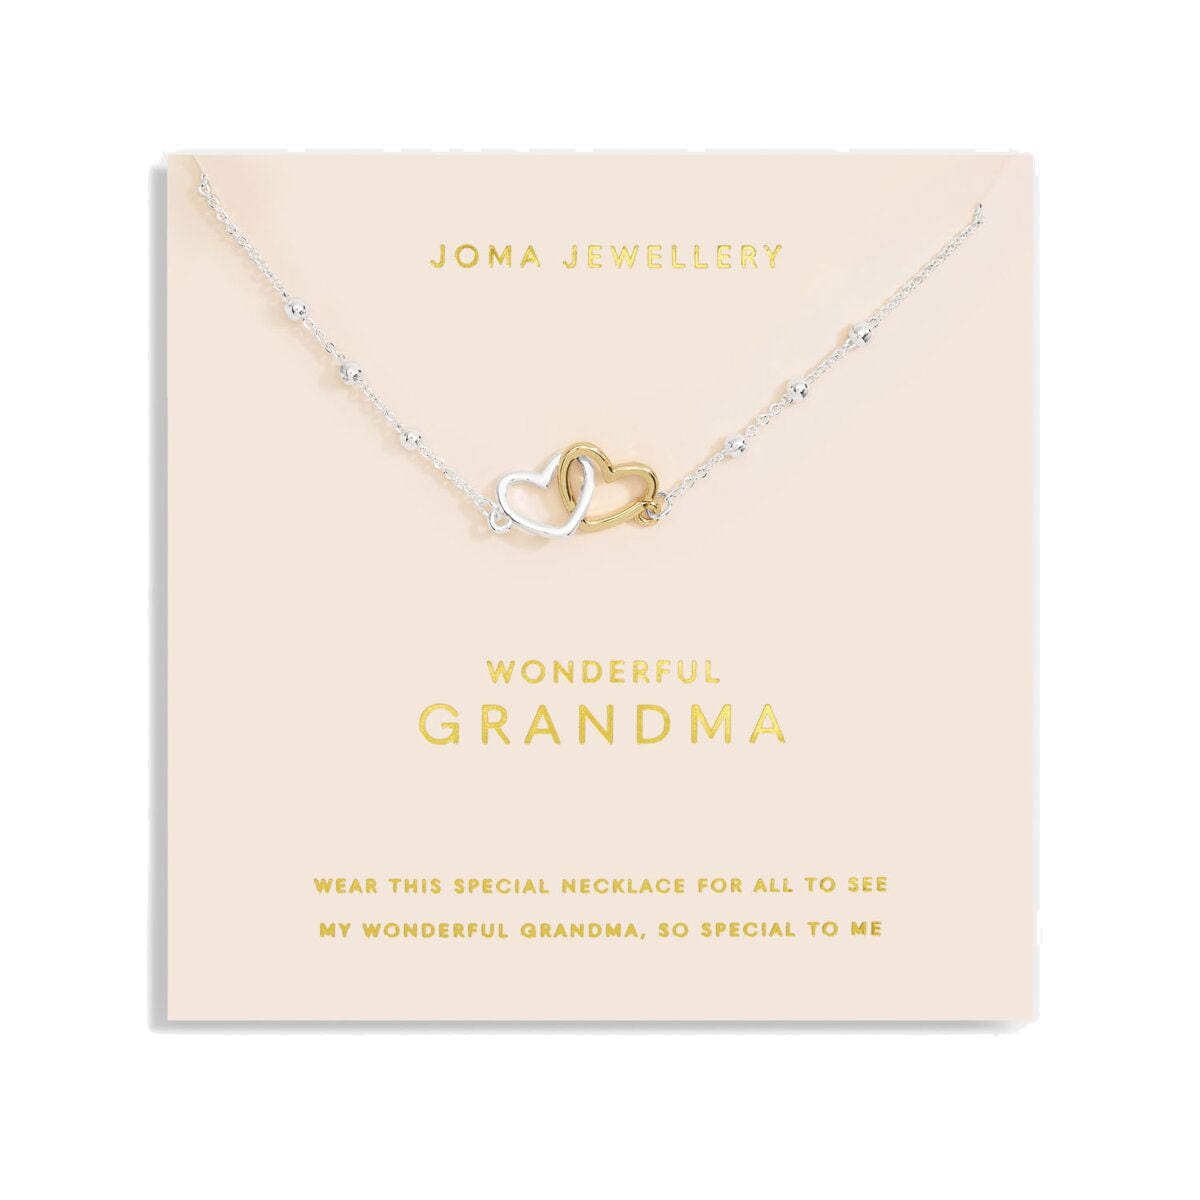 Joma Jewellery Necklace Joma Jewellery Forever Yours Necklace - Wonderful Grandma